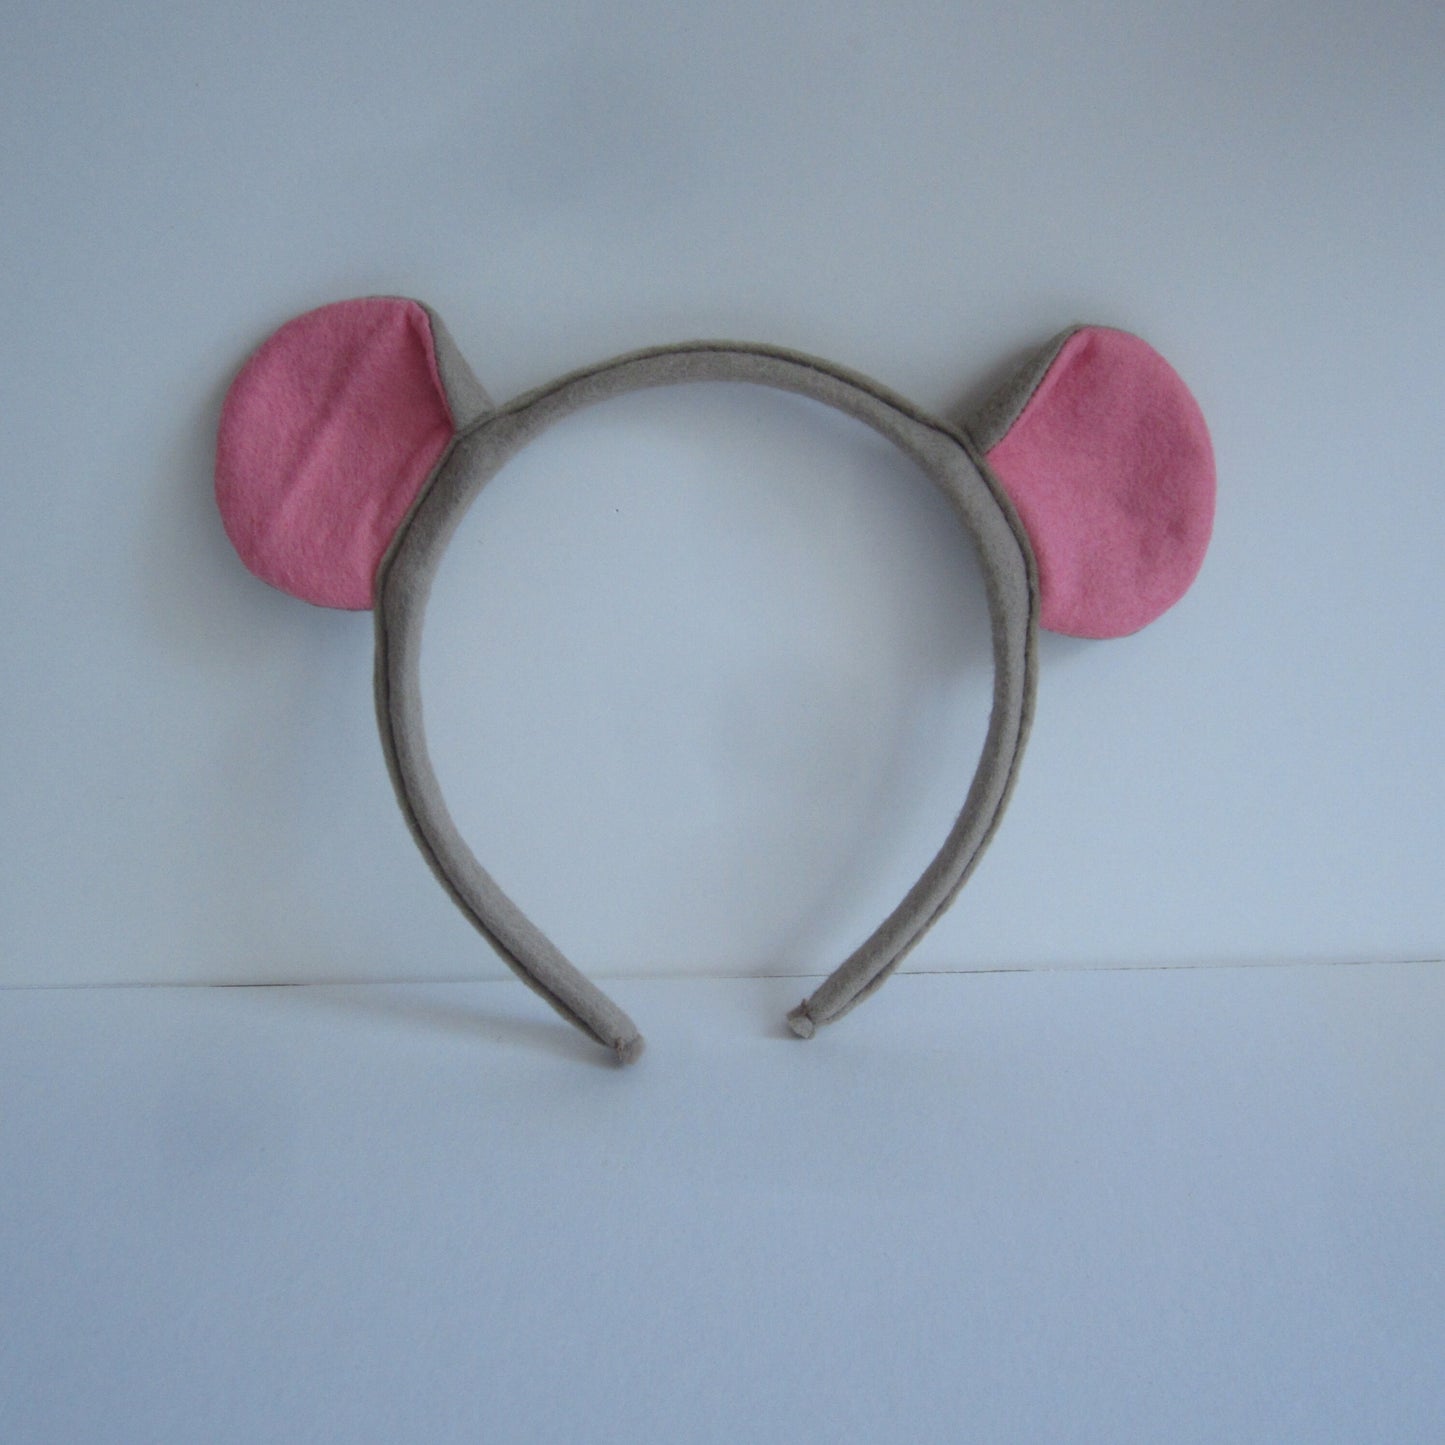 Mouse Ears Hairband Made of Beige Coloured Felt